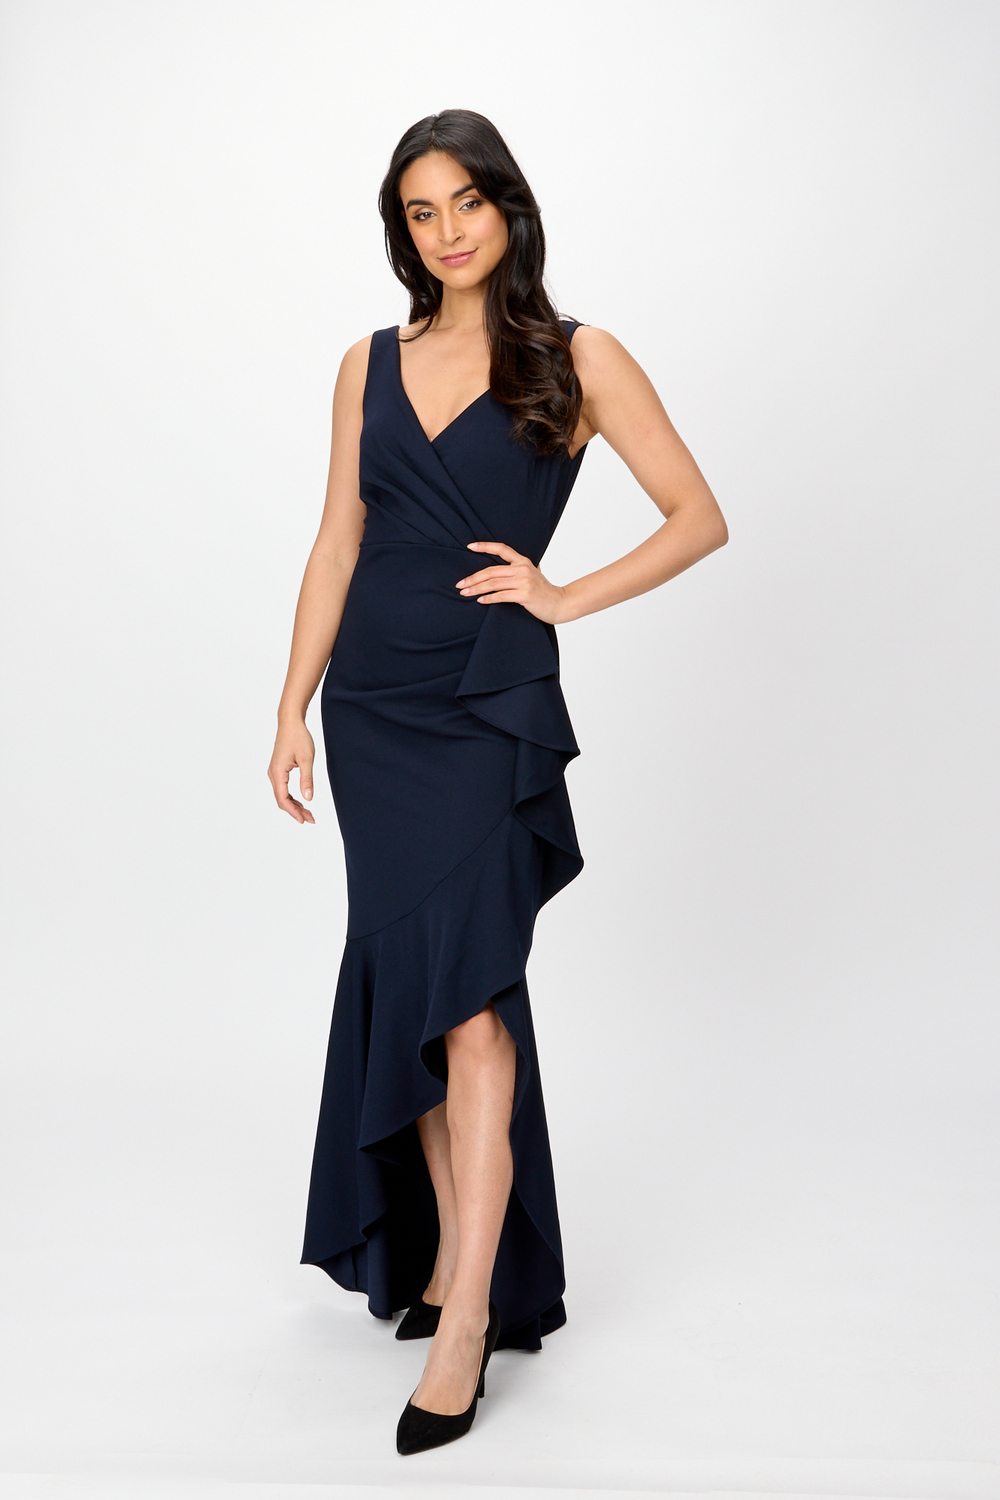 Ruffle Detail Slit Dress Style 241700. Midnight Blue